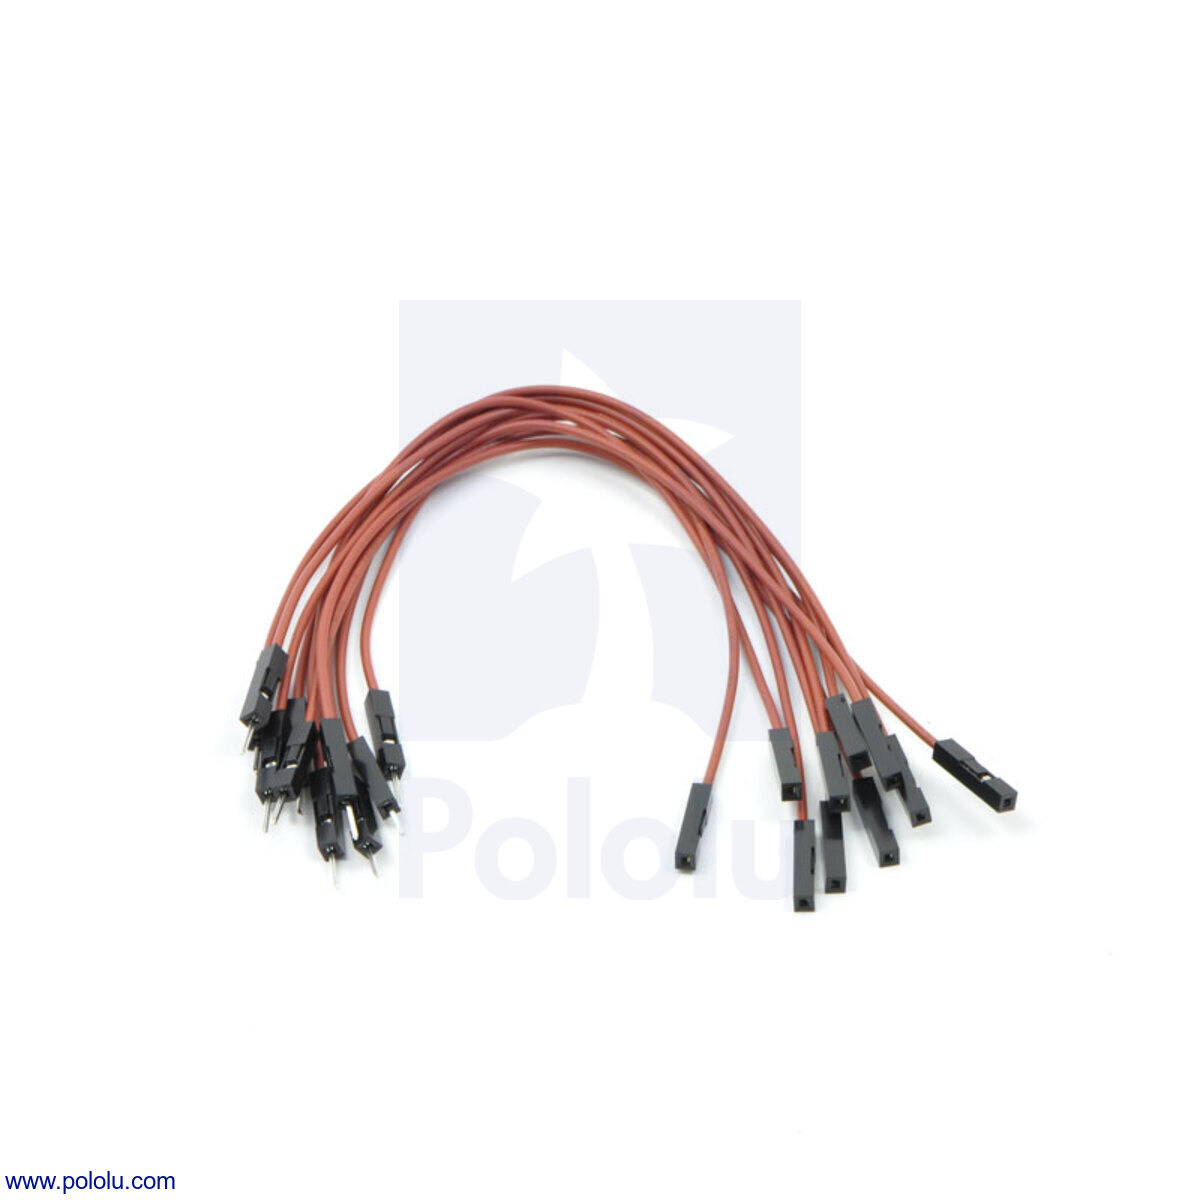 Pololu - Ribbon Cable Premium Jumper Wires 10-Color M-F 24 (60 cm)